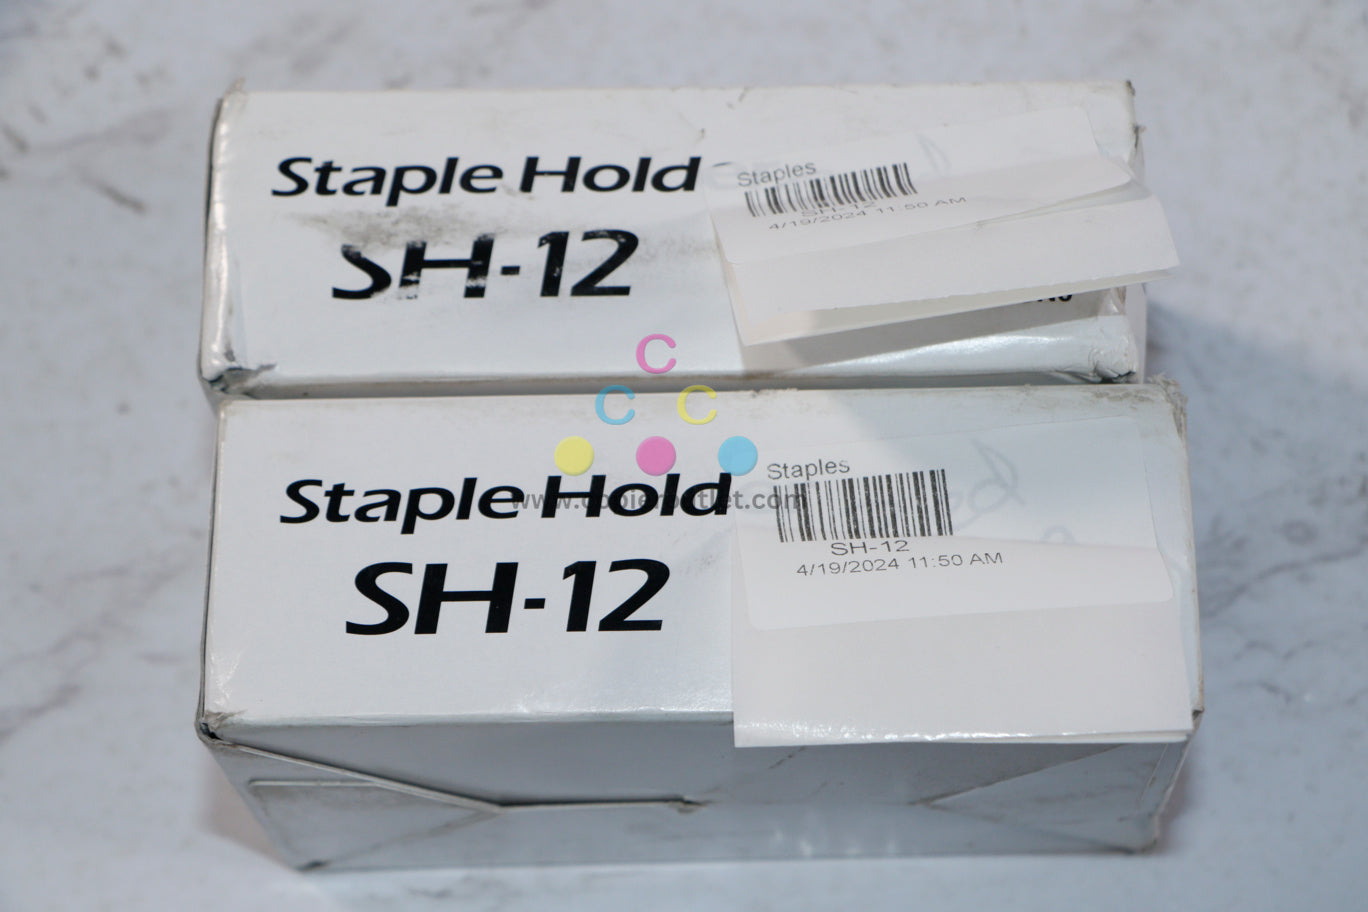 2 OEM Kyocera DF7110,DF790,DF791 Staple Cartridges SH-12 (SH12), 1903NB0UN0